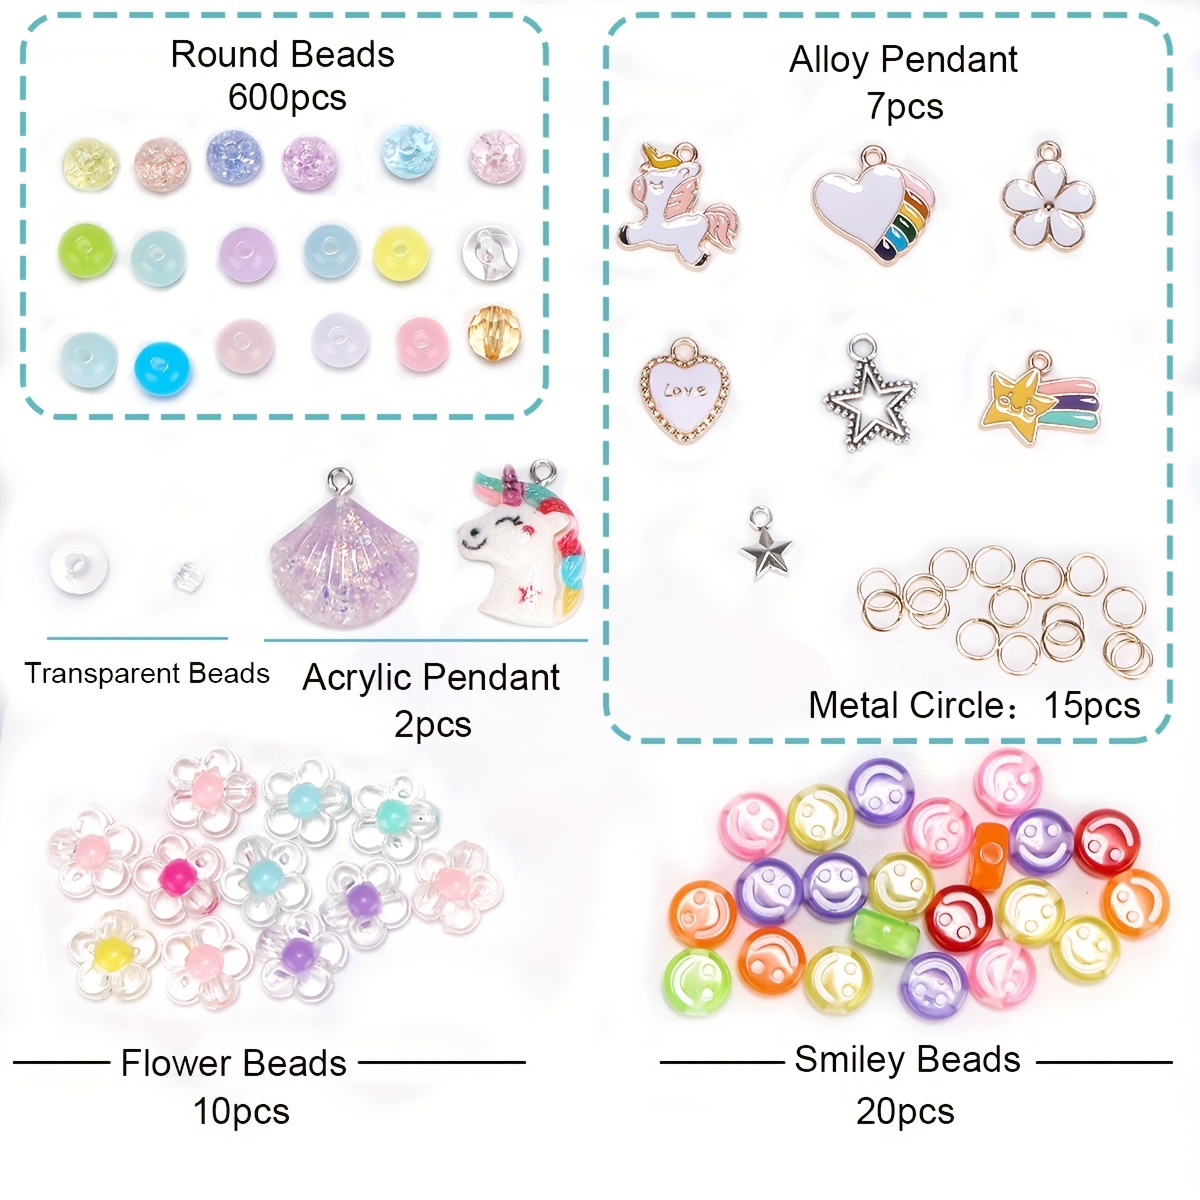 28 Jewelry Making Kits for Kids ideas  jewelry making kits, kits for kids,  jewelry making